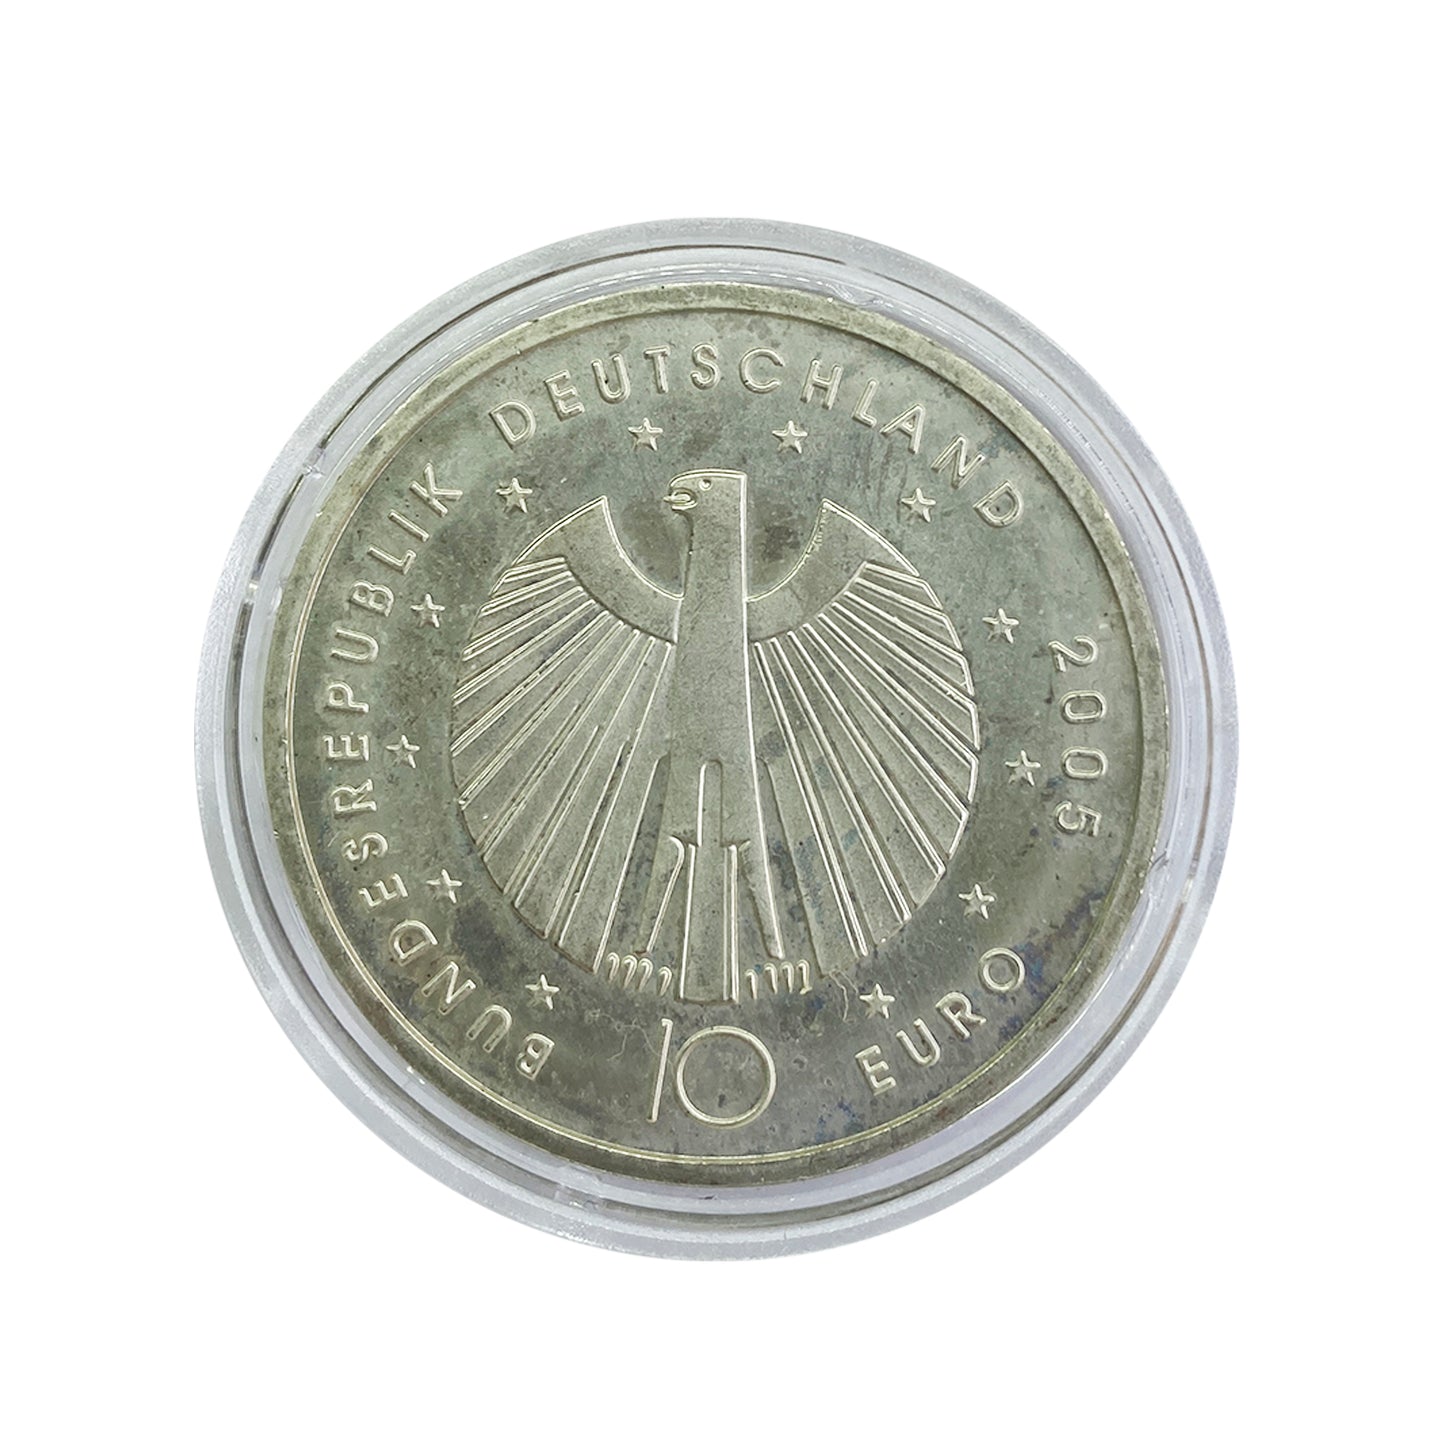 Alemania - Moneda 10 euros plata 2005 - Copa del Mundo FIFA 2006